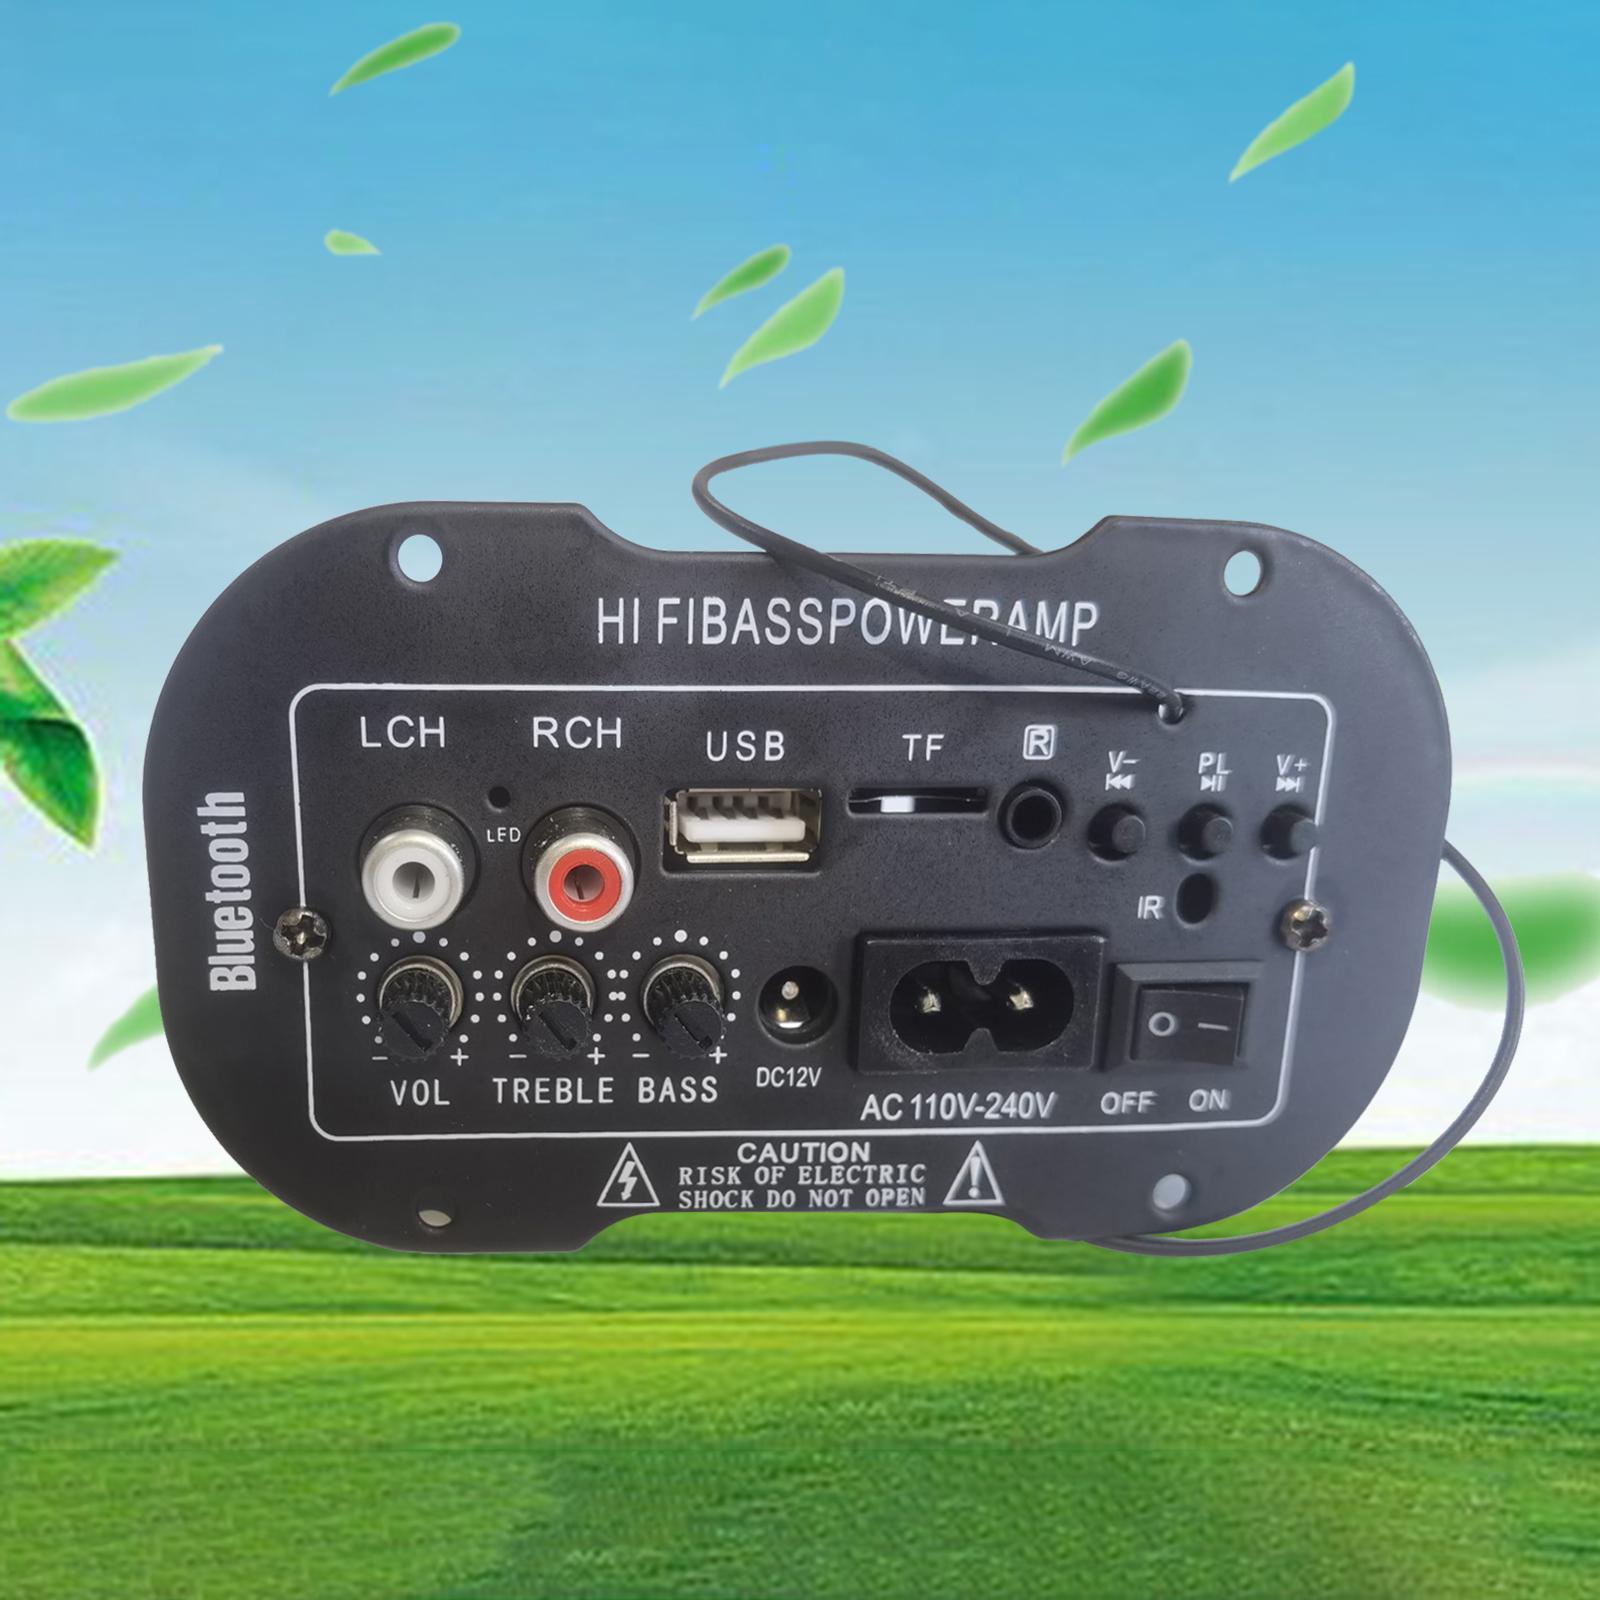 Hi Bass Power Subwoofer AMP Car Mini Digital Amplifier Radio Audio TF/USB